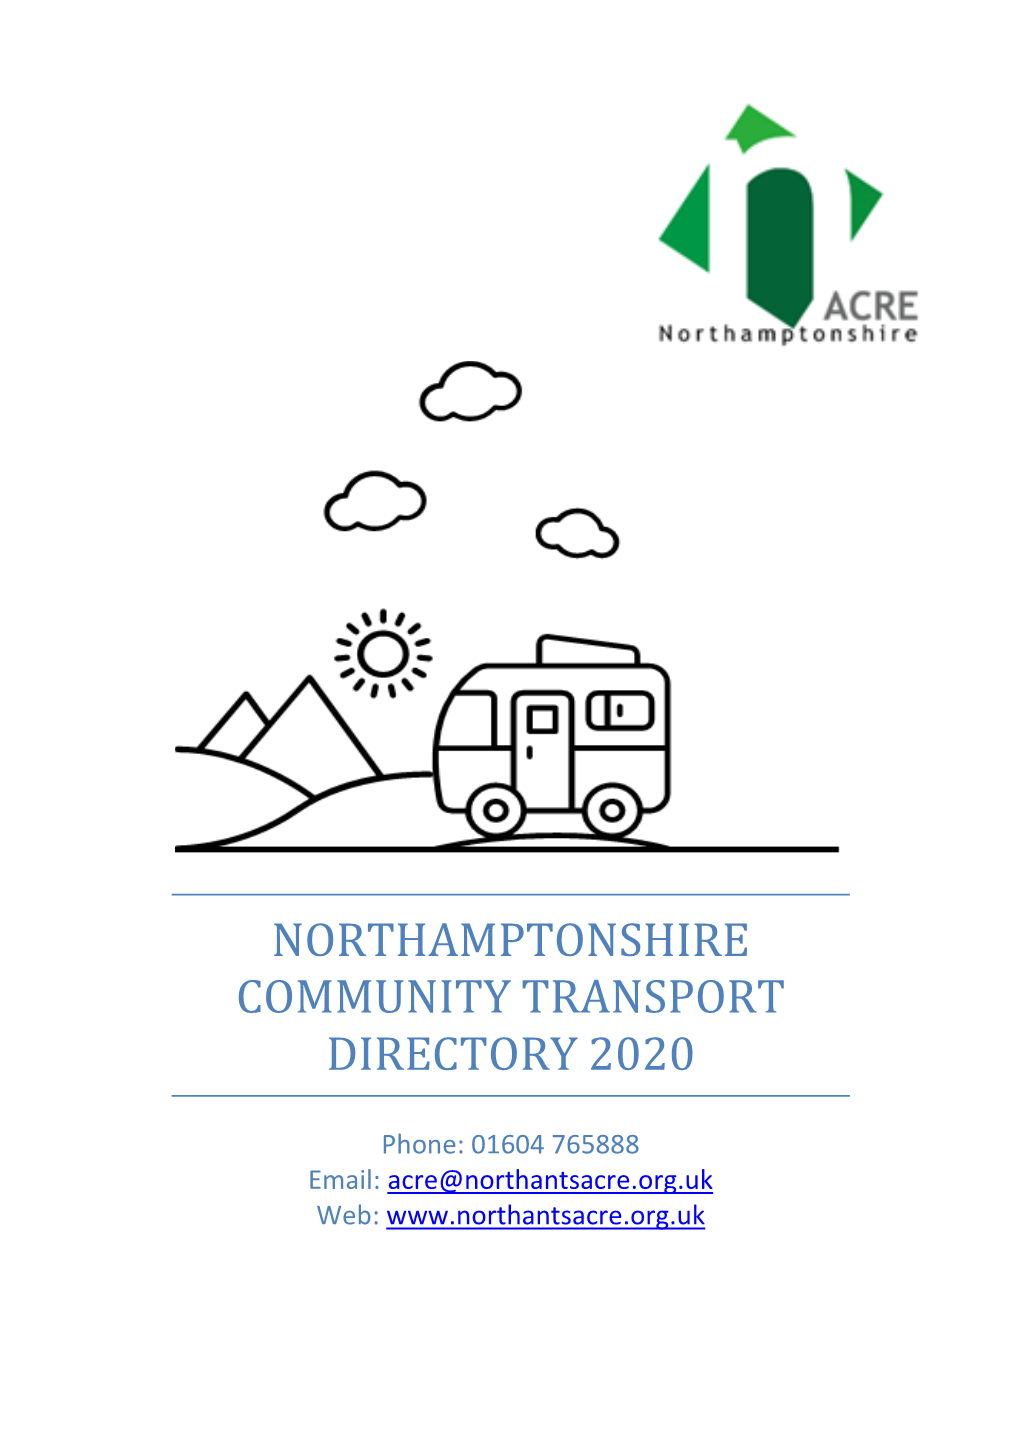 Northamptonshire Community Transport Directory 2020